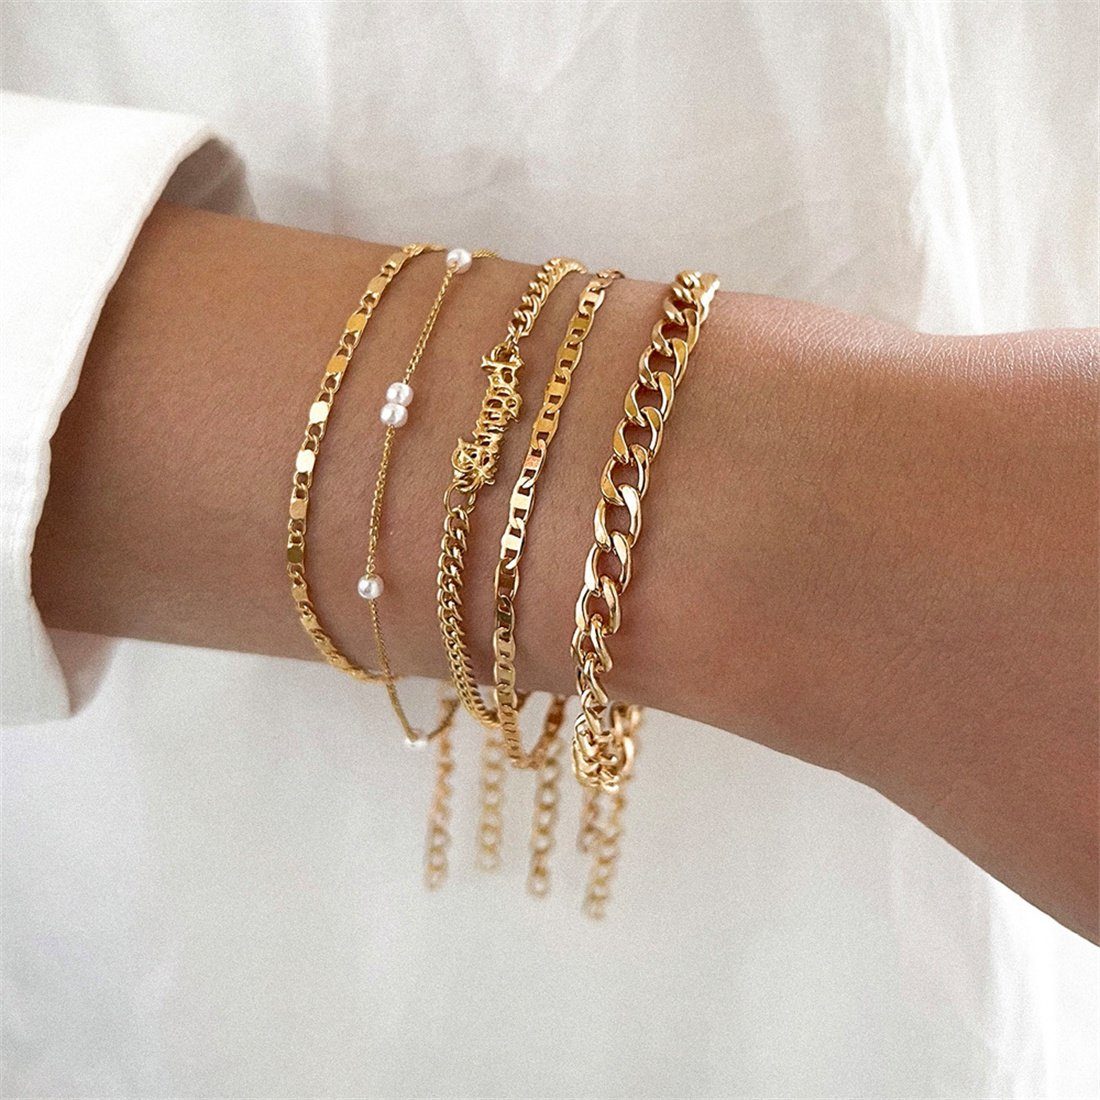 Gold DÖRÖY Armband von Perle Trend Set, Armband Damen Mode 5 Armband Set Brief